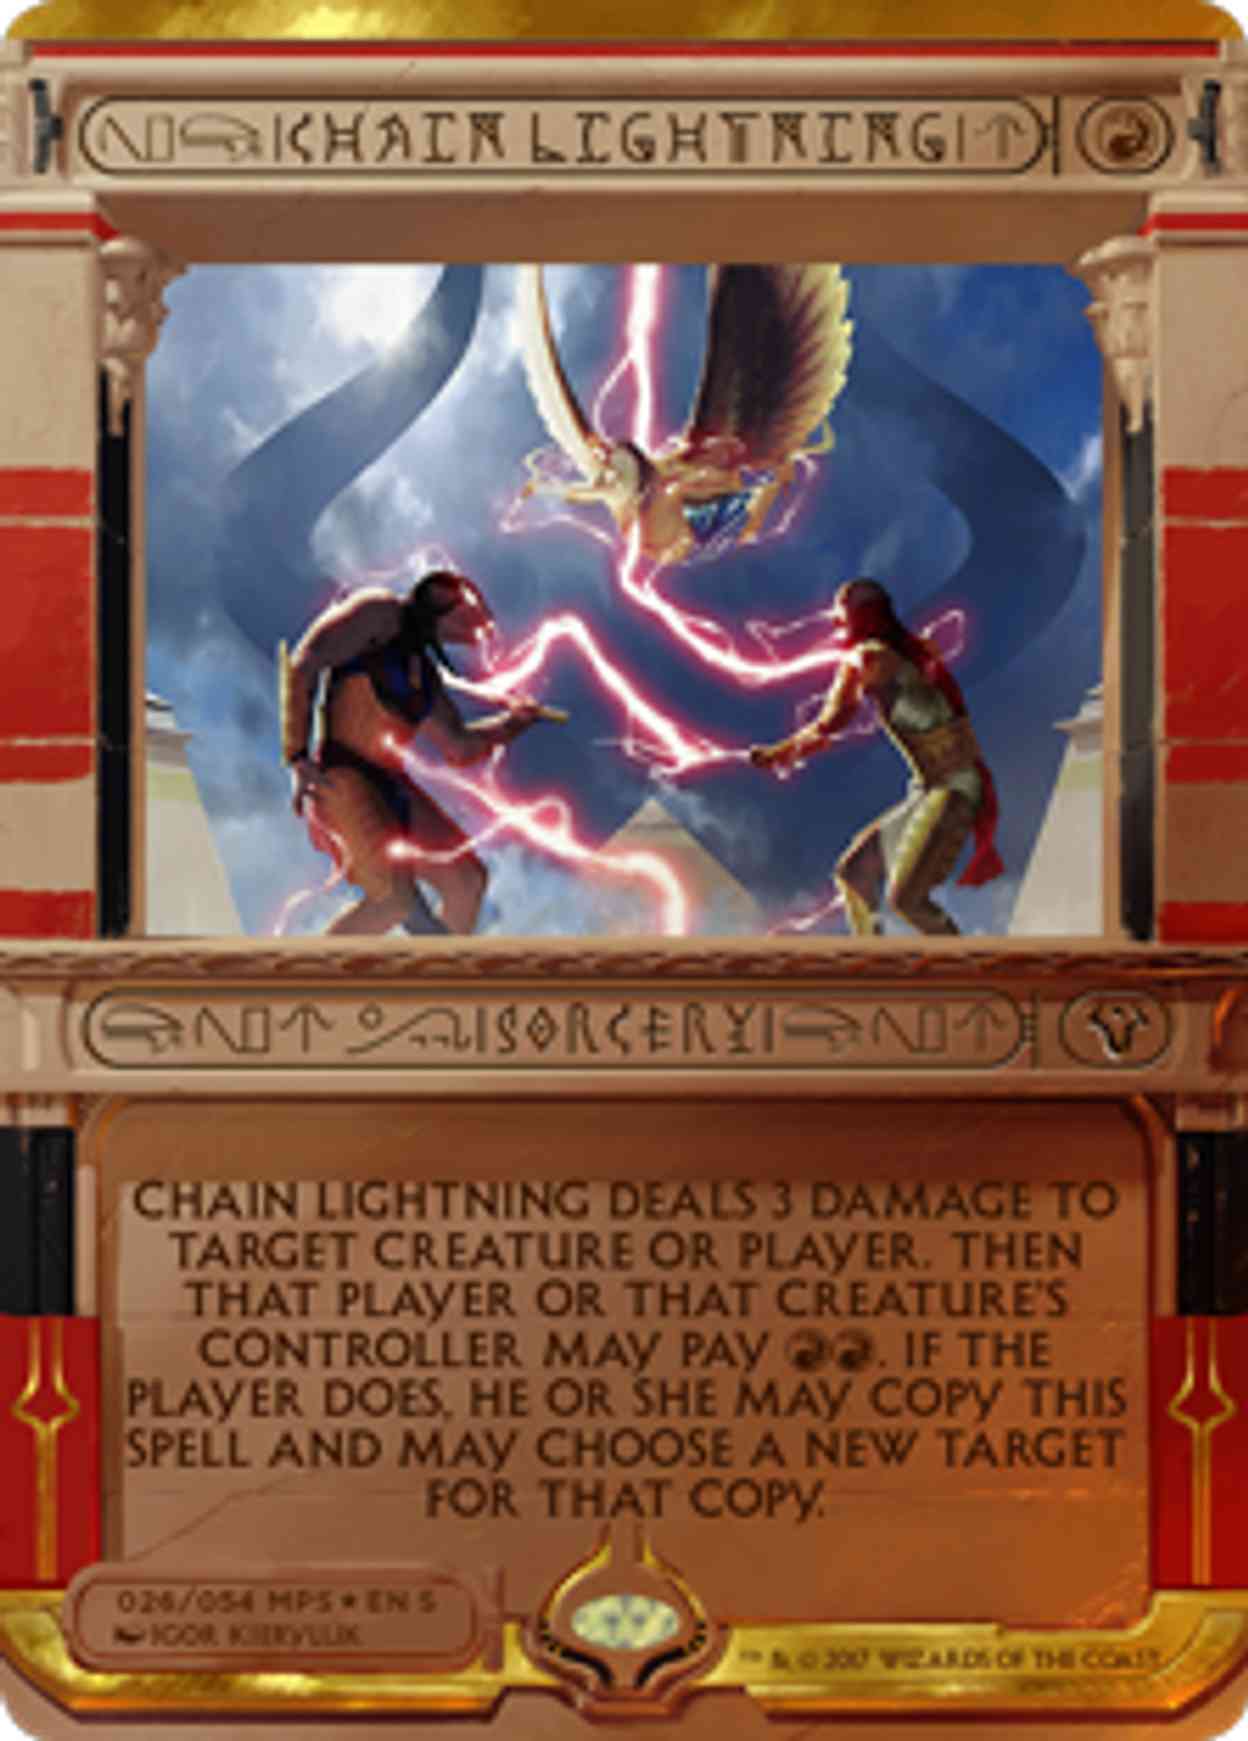 Chain Lightning magic card front